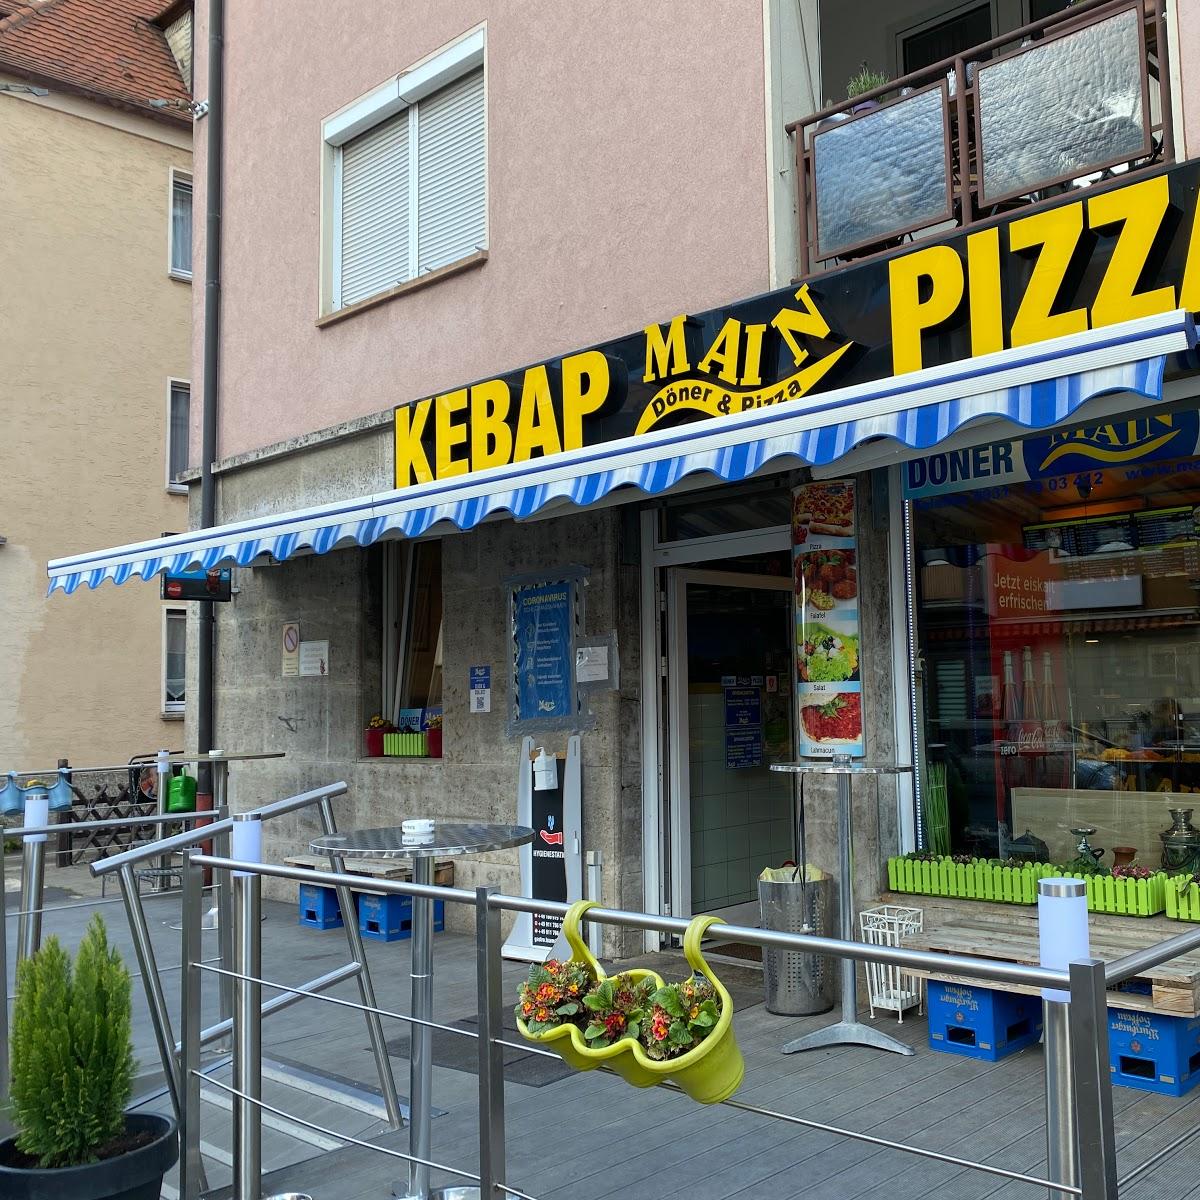 Restaurant "Main Döner & Pizza" in Würzburg